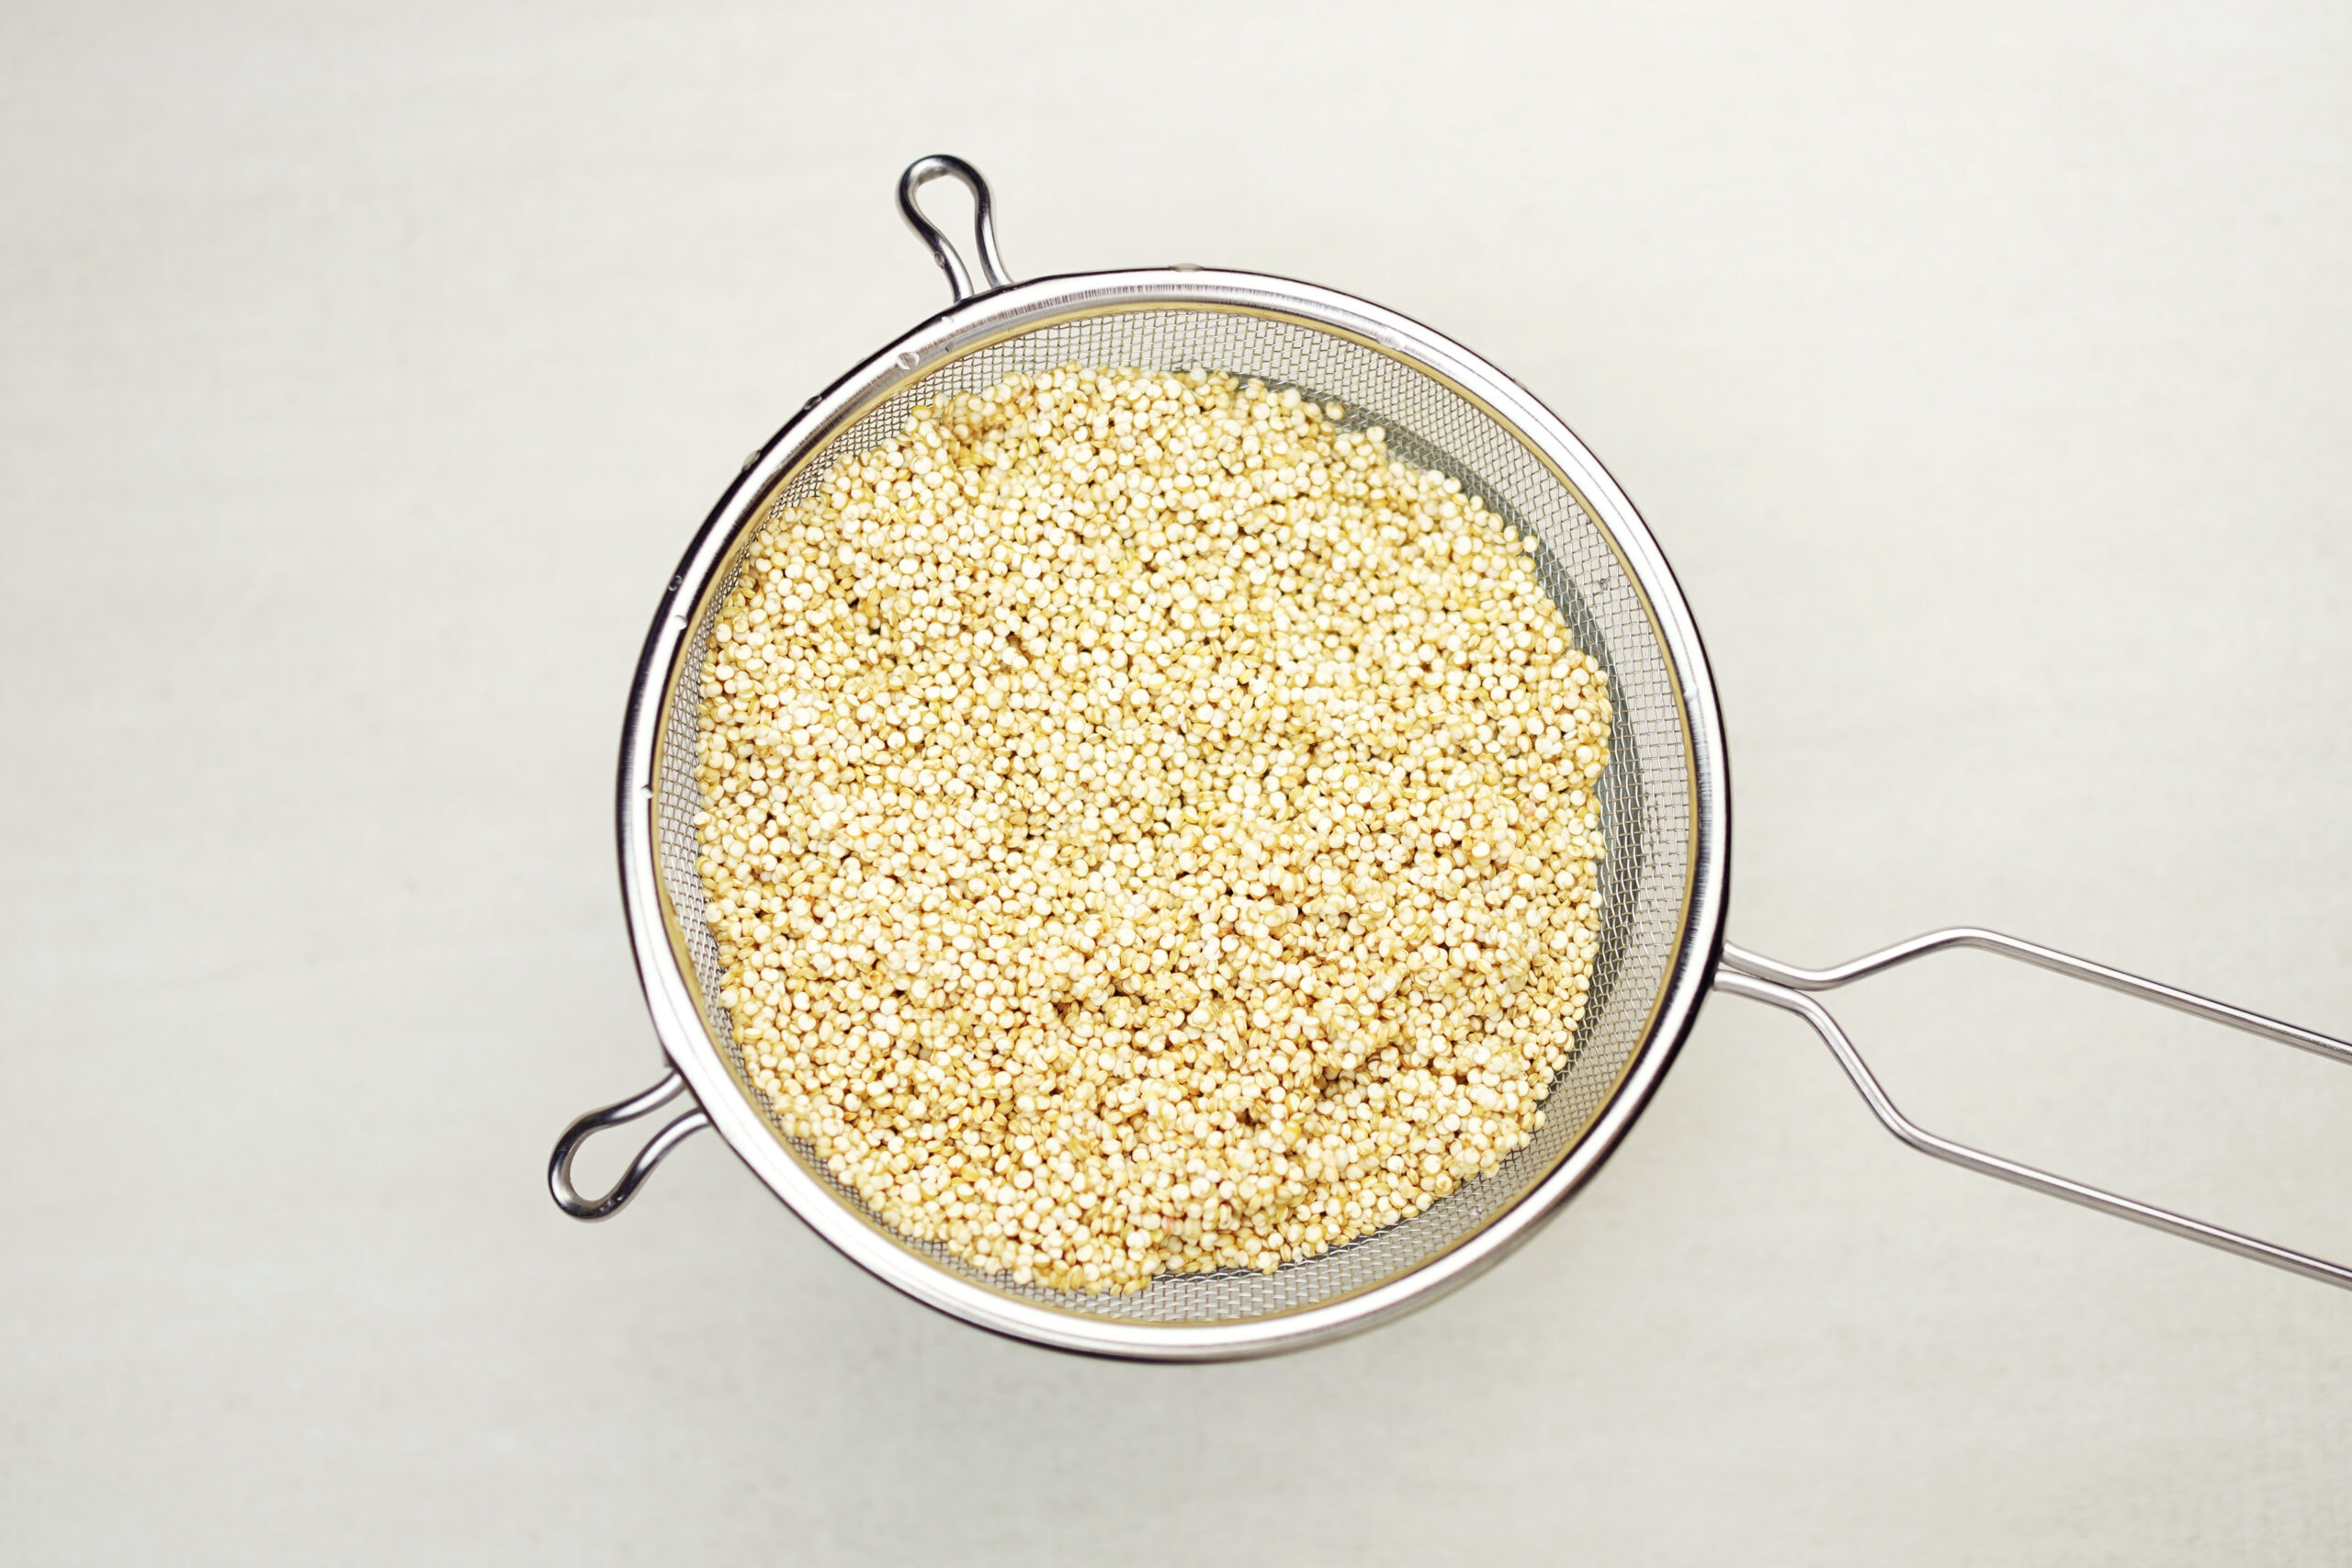 Quinoa grains in mesh strainer, top view.